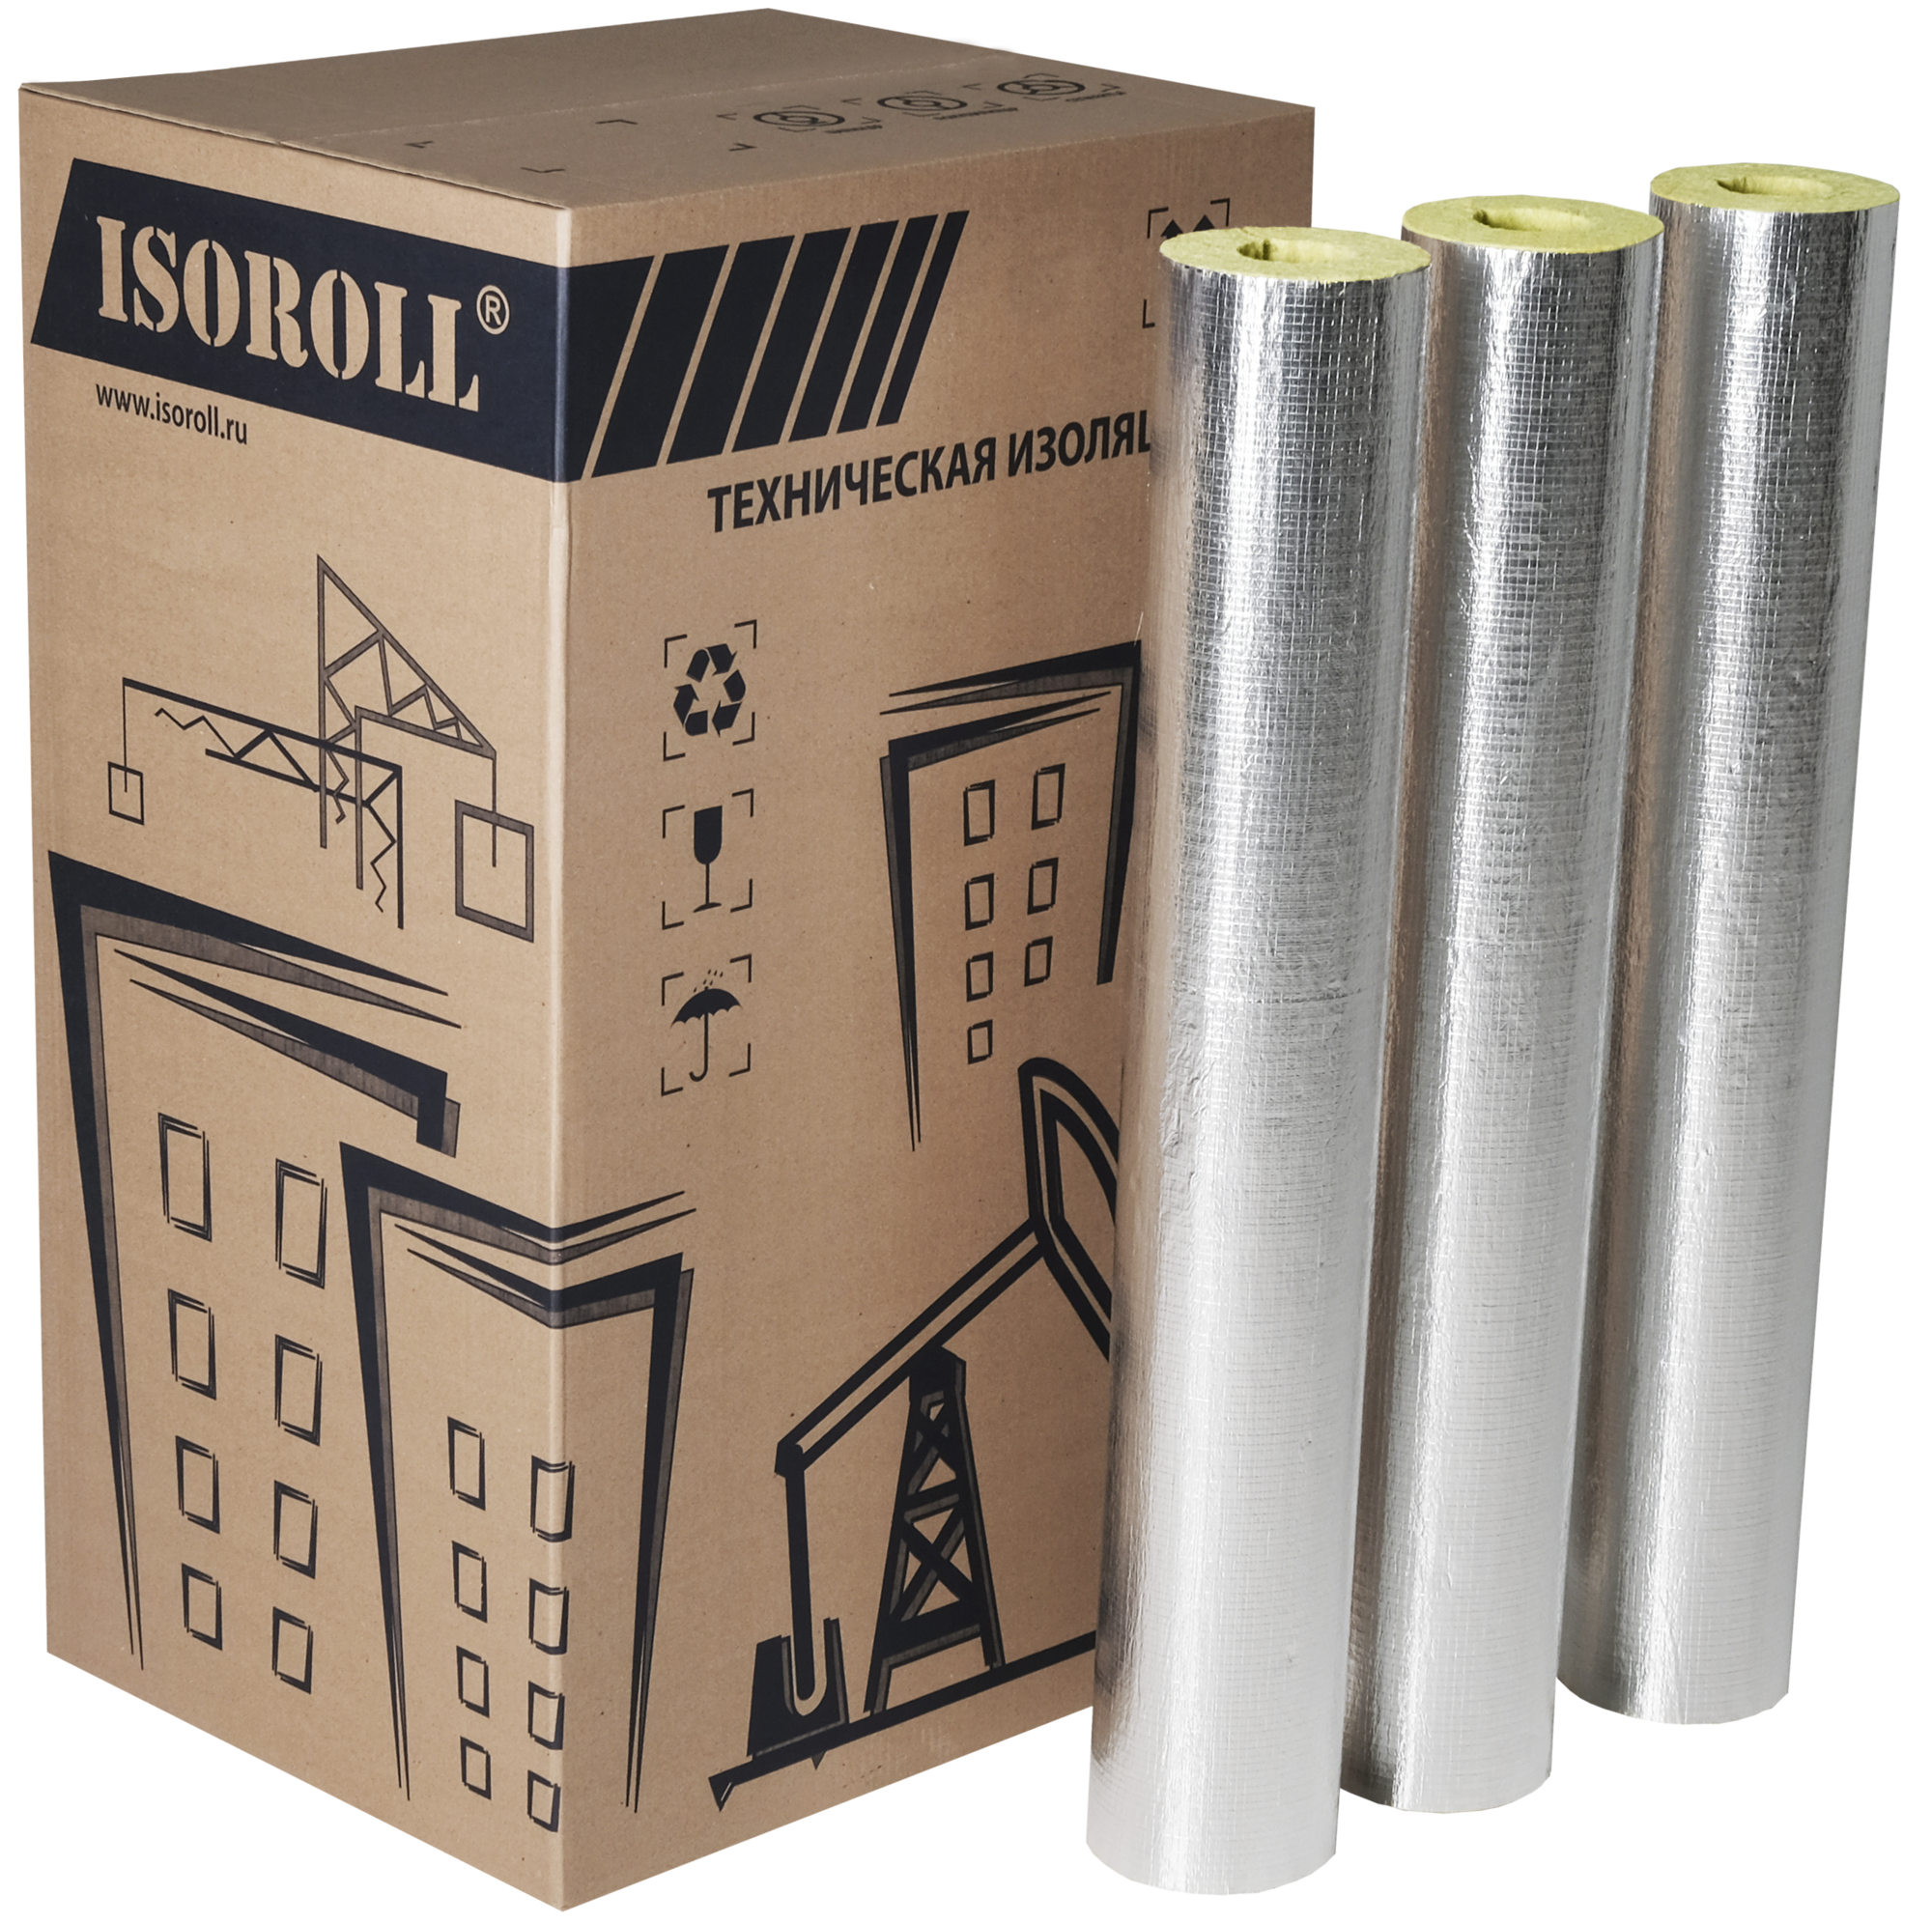 Цилиндр теплоизоляционный Isoroll® с технической фольгой НГ для труб 70 мм x 80 мм